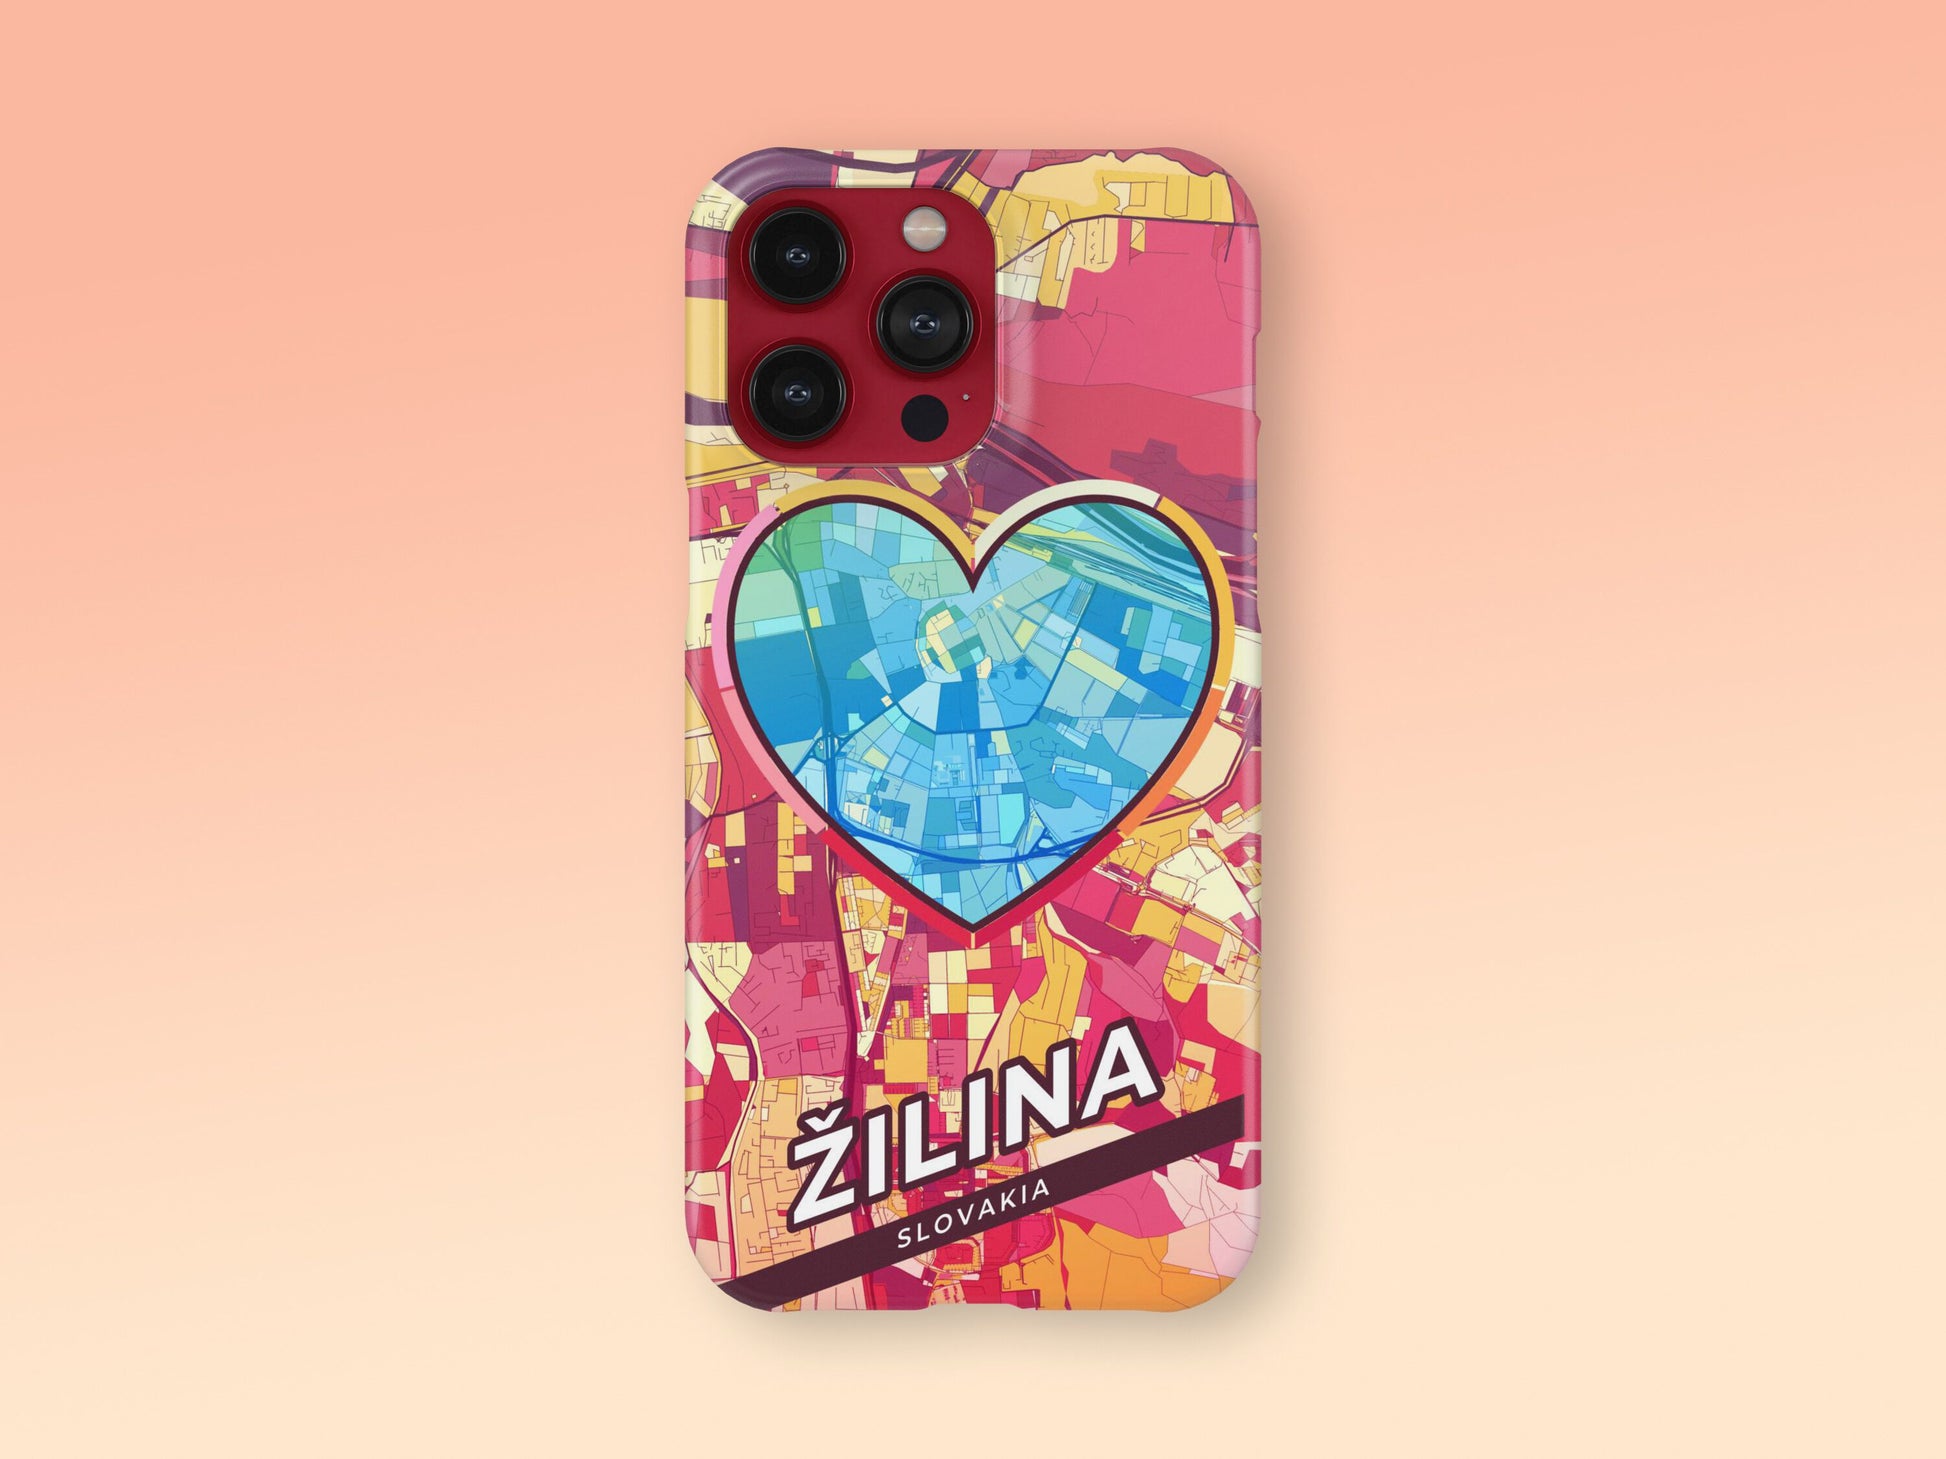 Žilina Slovakia slim phone case with colorful icon 2